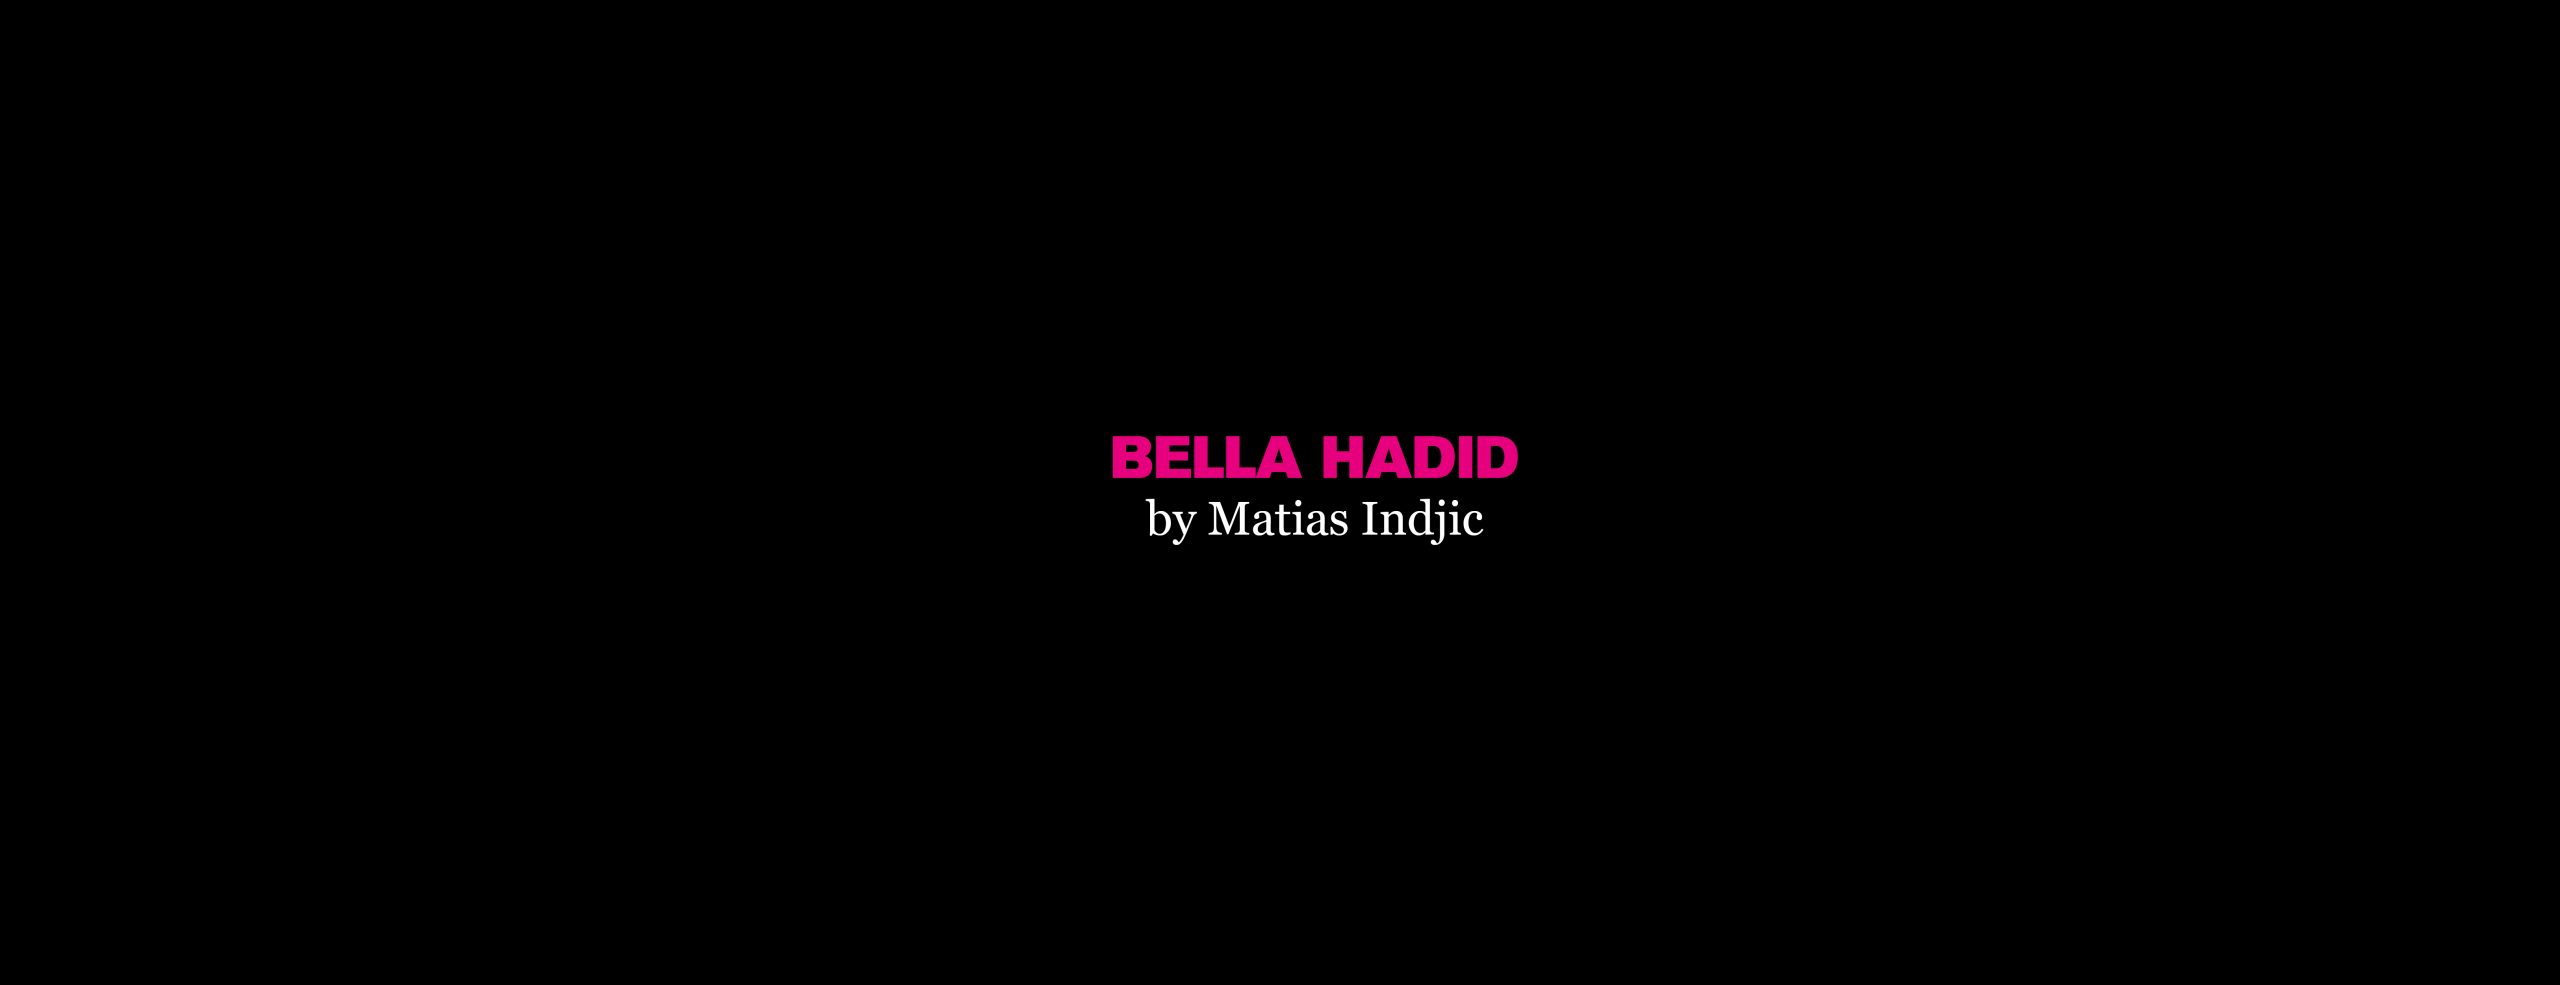 Bella Hadid by Matias Indjic